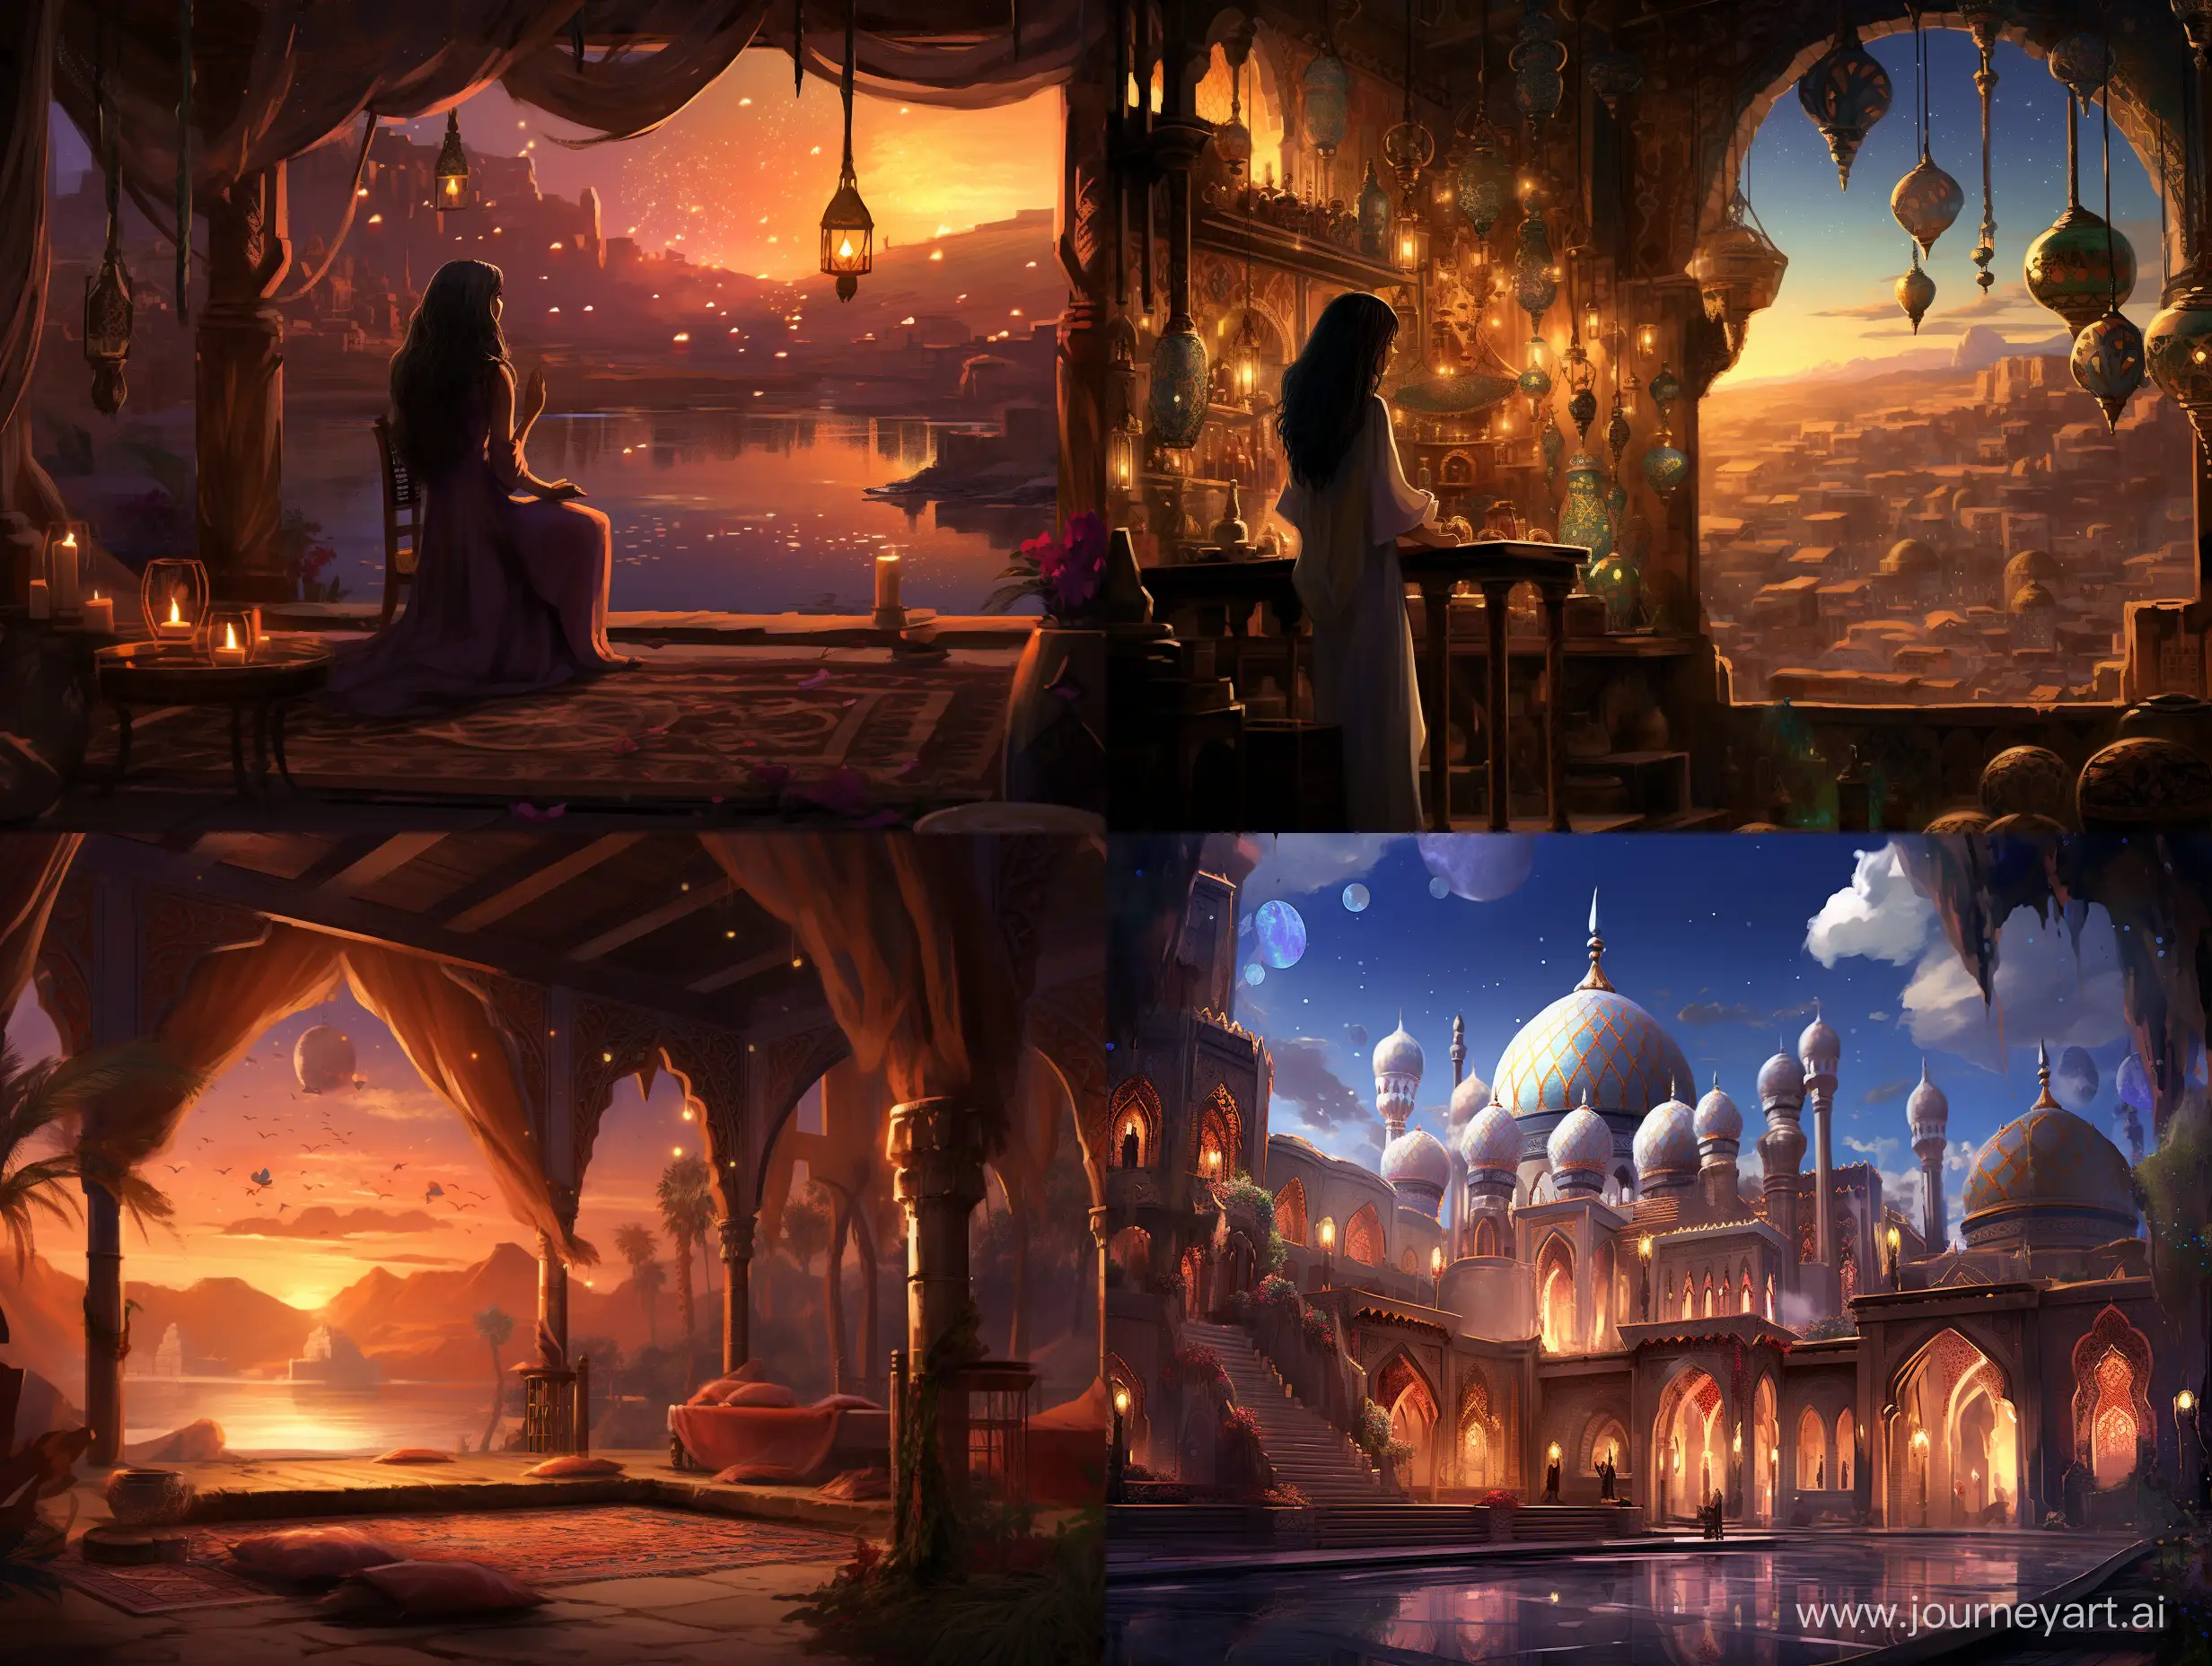 Illustration like a fairytale of the magic wand, Arabian atmosphere